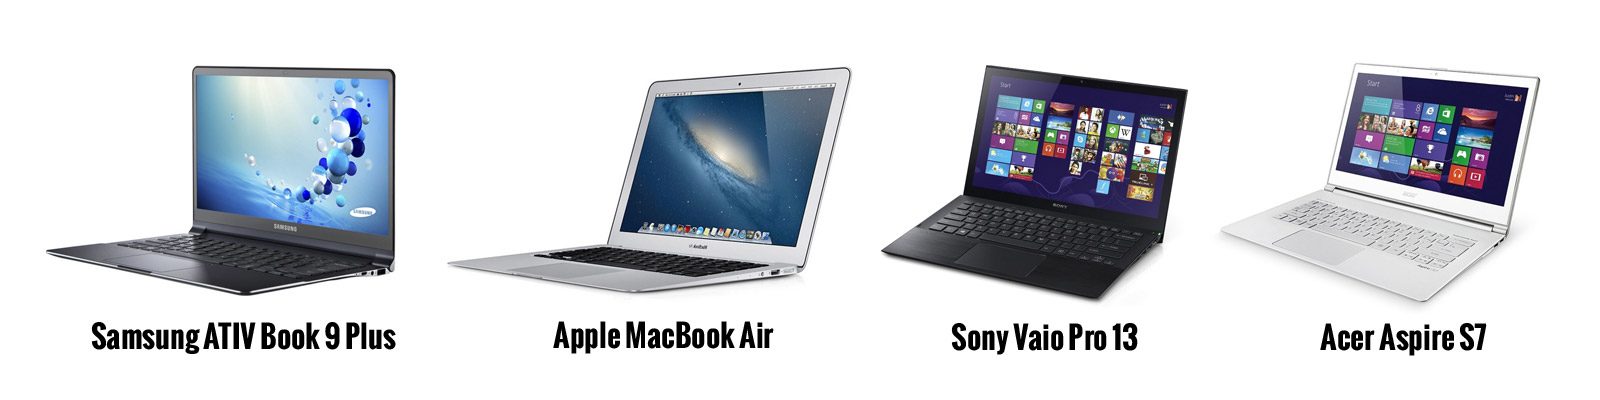 Samsung Ativ Book 9 Plus vs Apple Macbook Air vs Sony Vaio Pro 13 vs Acer Aspire S7